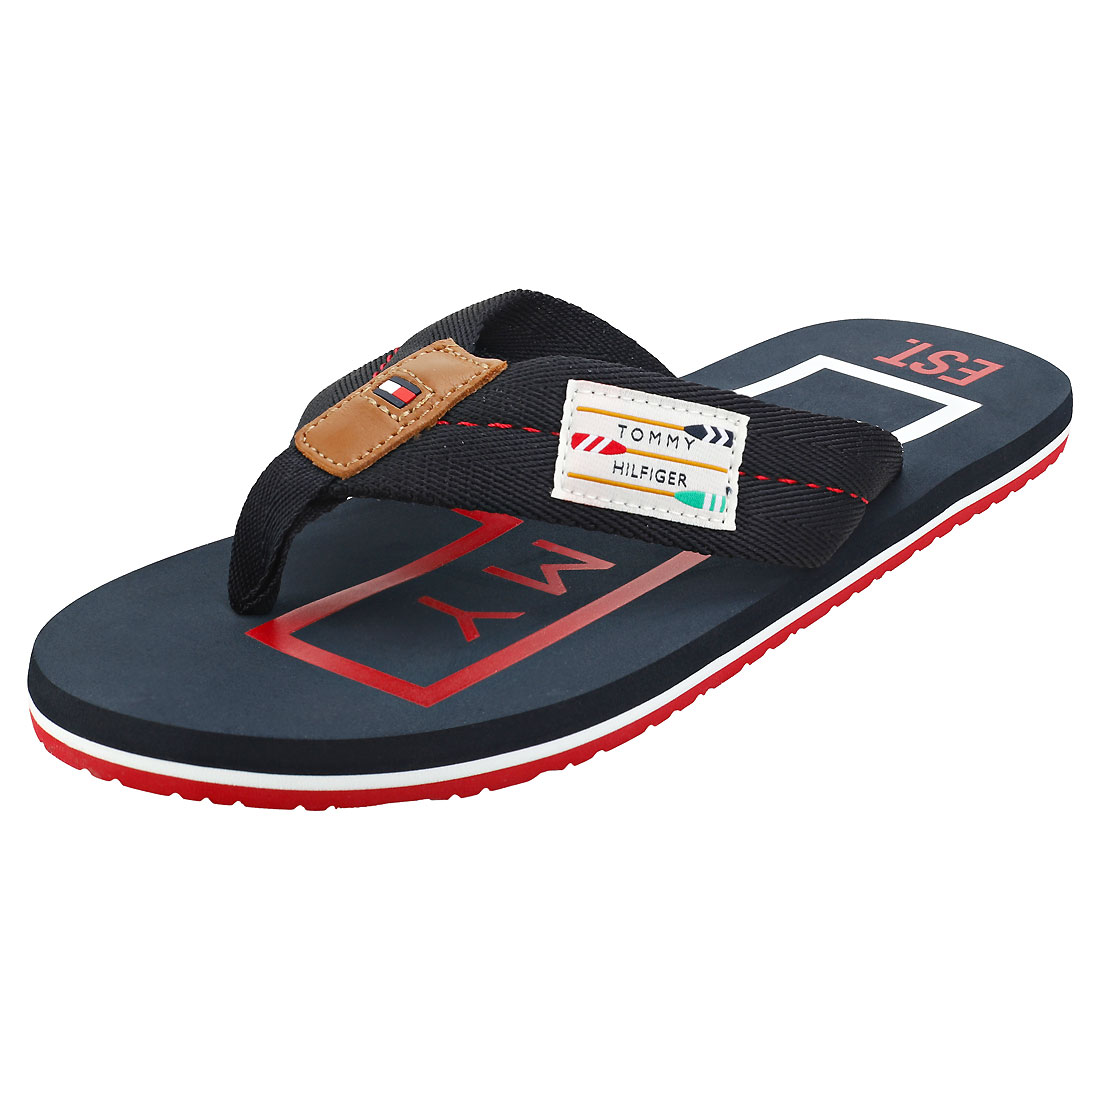 Eric Carl Flip Flops for Men,Stylish Beach Flip Flops Summer Flip Flop Sandals Slippers,Comfortable Beach Casual Shoes 